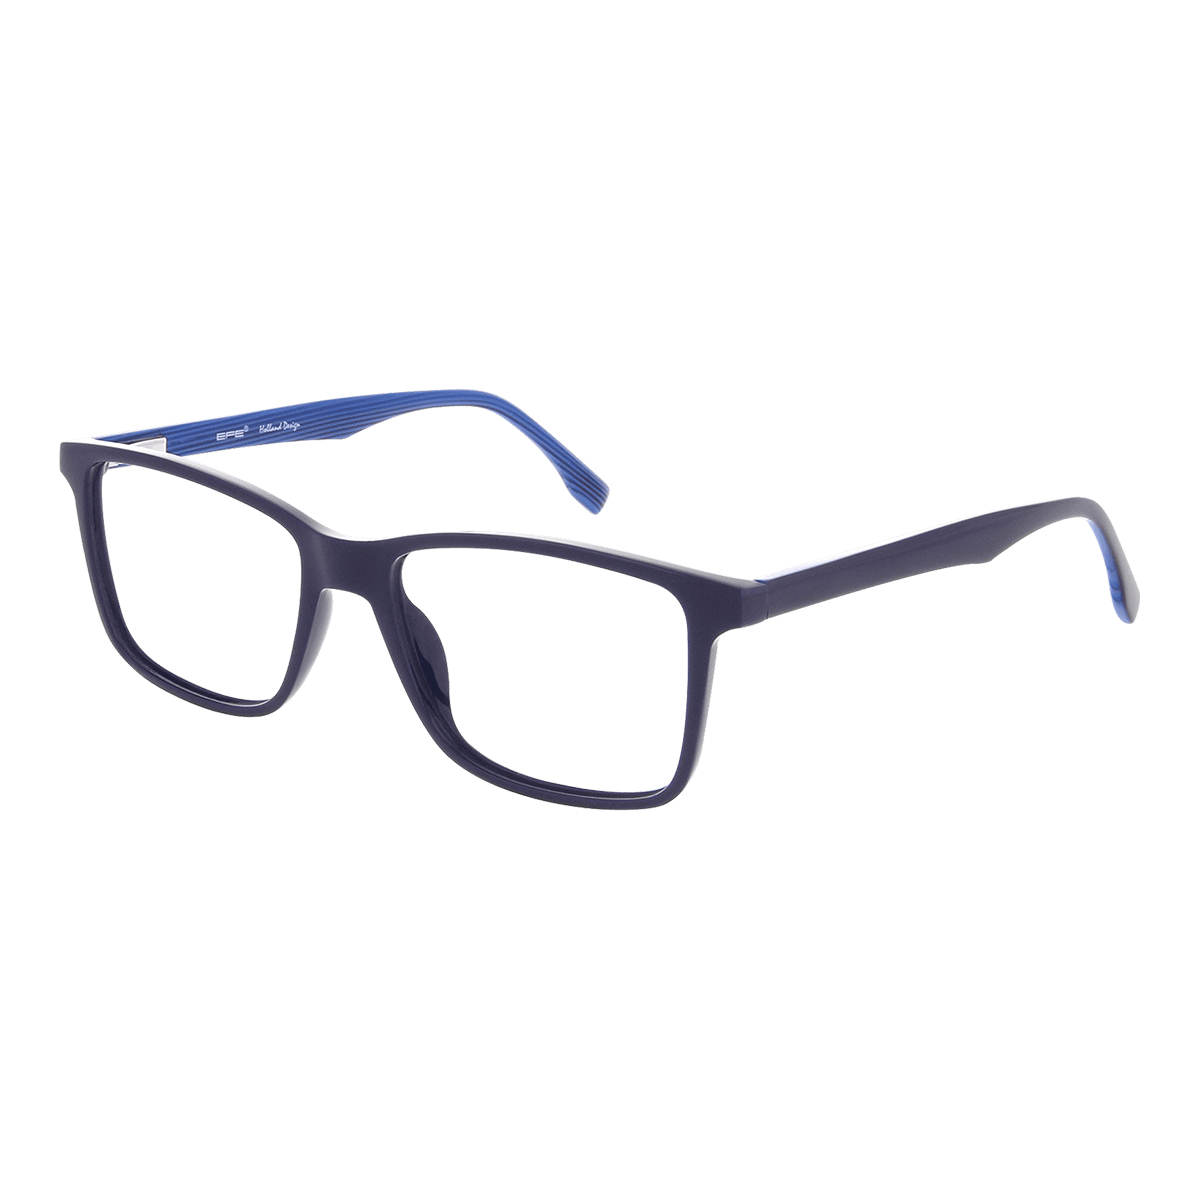 Sidon - Square Blue Reading Glasses for Men